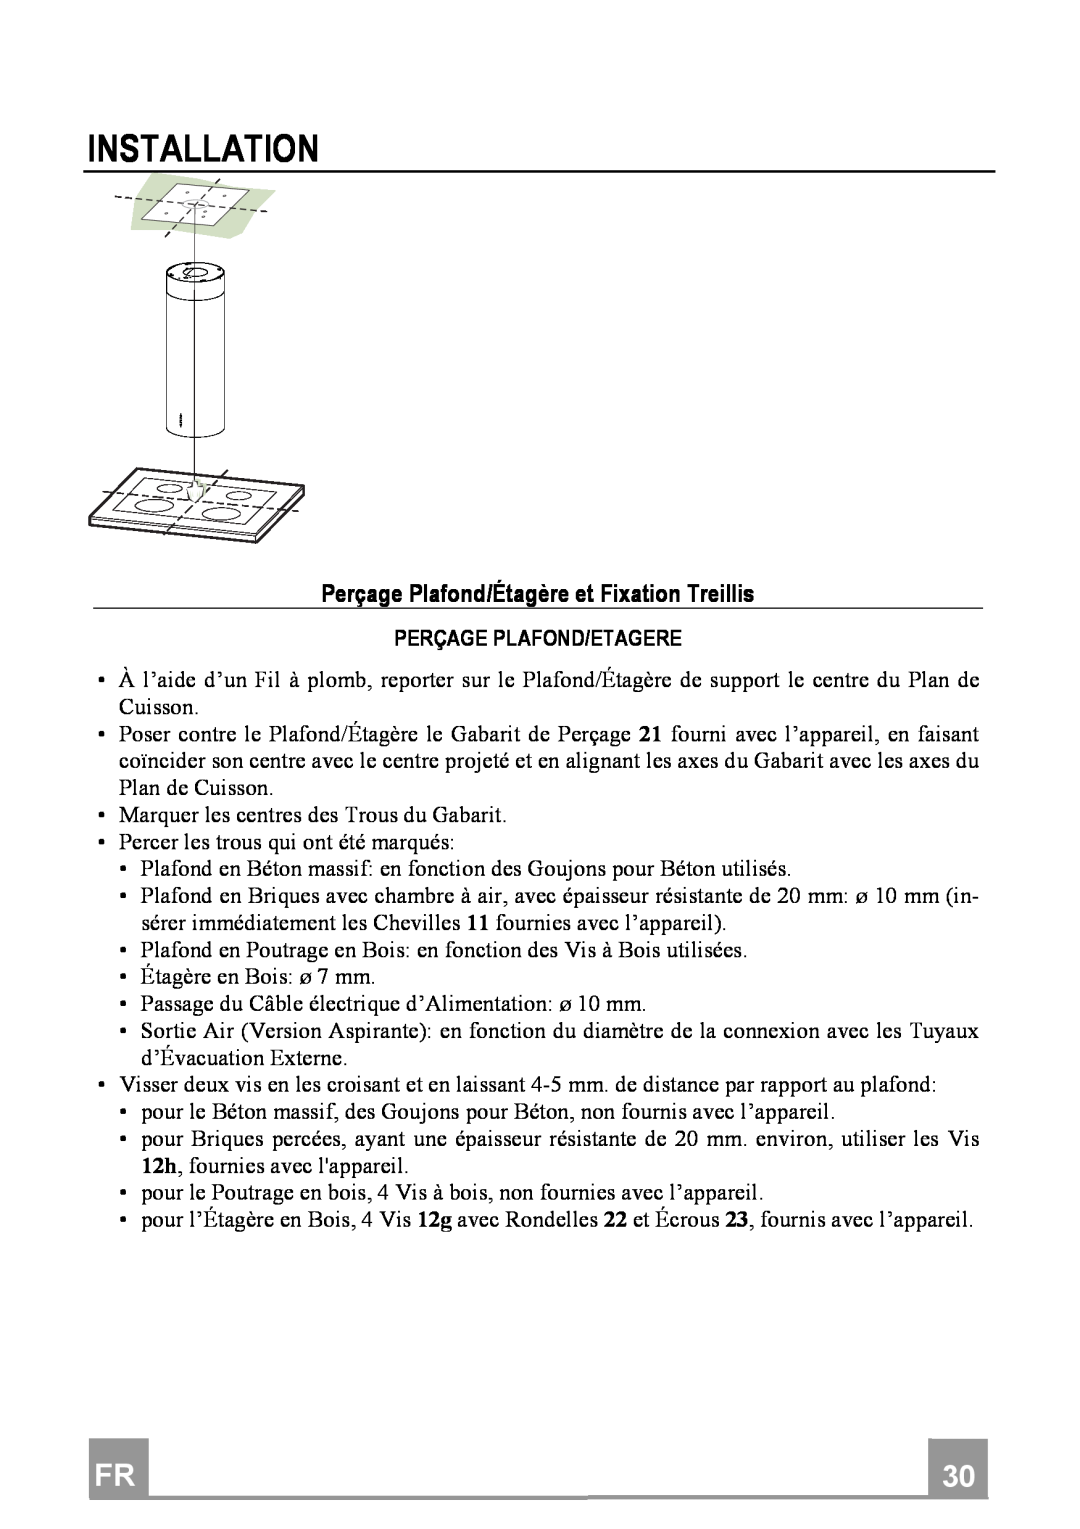 Franke Consumer Products FTU 3807 I manual PerçagePlafond/ÉtagèreetFixationTreillis, Installation 